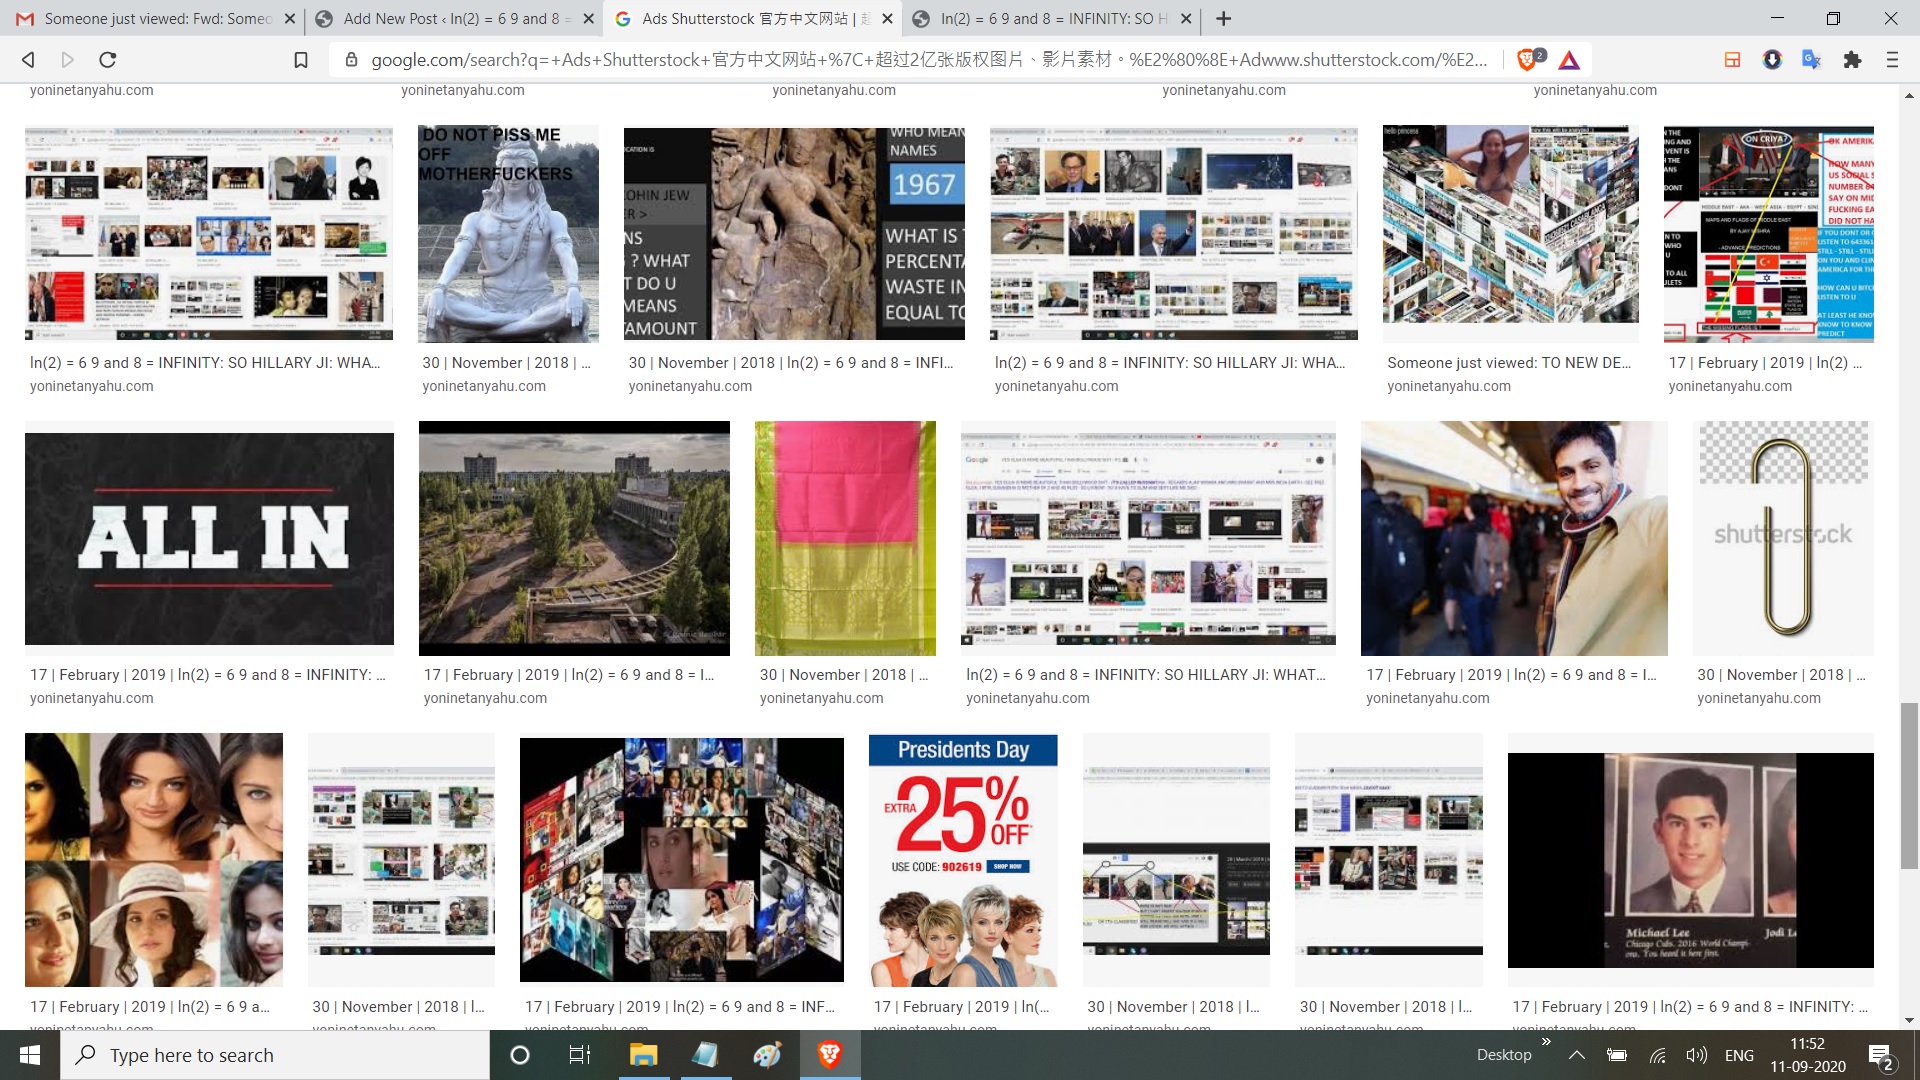 Ads Shutterstock 官方中文网站 | 超过2亿张版权图片、影片素材。‎ Adwww.shutterstock.com/‎ 立即免费注册，浏览我们的图库搜寻您的完美图 日新增图片150,000张. 每日无限下载. 最新亚洲创意素材. 多语言网站. 免版税高清图ç ‡. 月计划仅需$29. 单张或包月灵活购买方式. 一次购买永久版权. 类型: 图片, 照片, 视频影片, 向量, 插画, 图标, 剪贴画, 音乐. 背景素材大全 几秒钟便能查找您心仪的背景纹理图。 抽象，几何，季节背景，应有尽有！ 精é 80 热门视频影音素材 单片及多种灵活定价方案 婚礼、景观、慢动作等应有尽有 Bigstock库存矢量图 | 七天的免费图像 | BigstockPhoto.com‎ Adwww.bigstockphoto.com/中文‎ 今天就开始免费试用！符合任何预算的灵活配套。简单的定价让您无需烦恼。 B3时聊天支持. 不断增长的